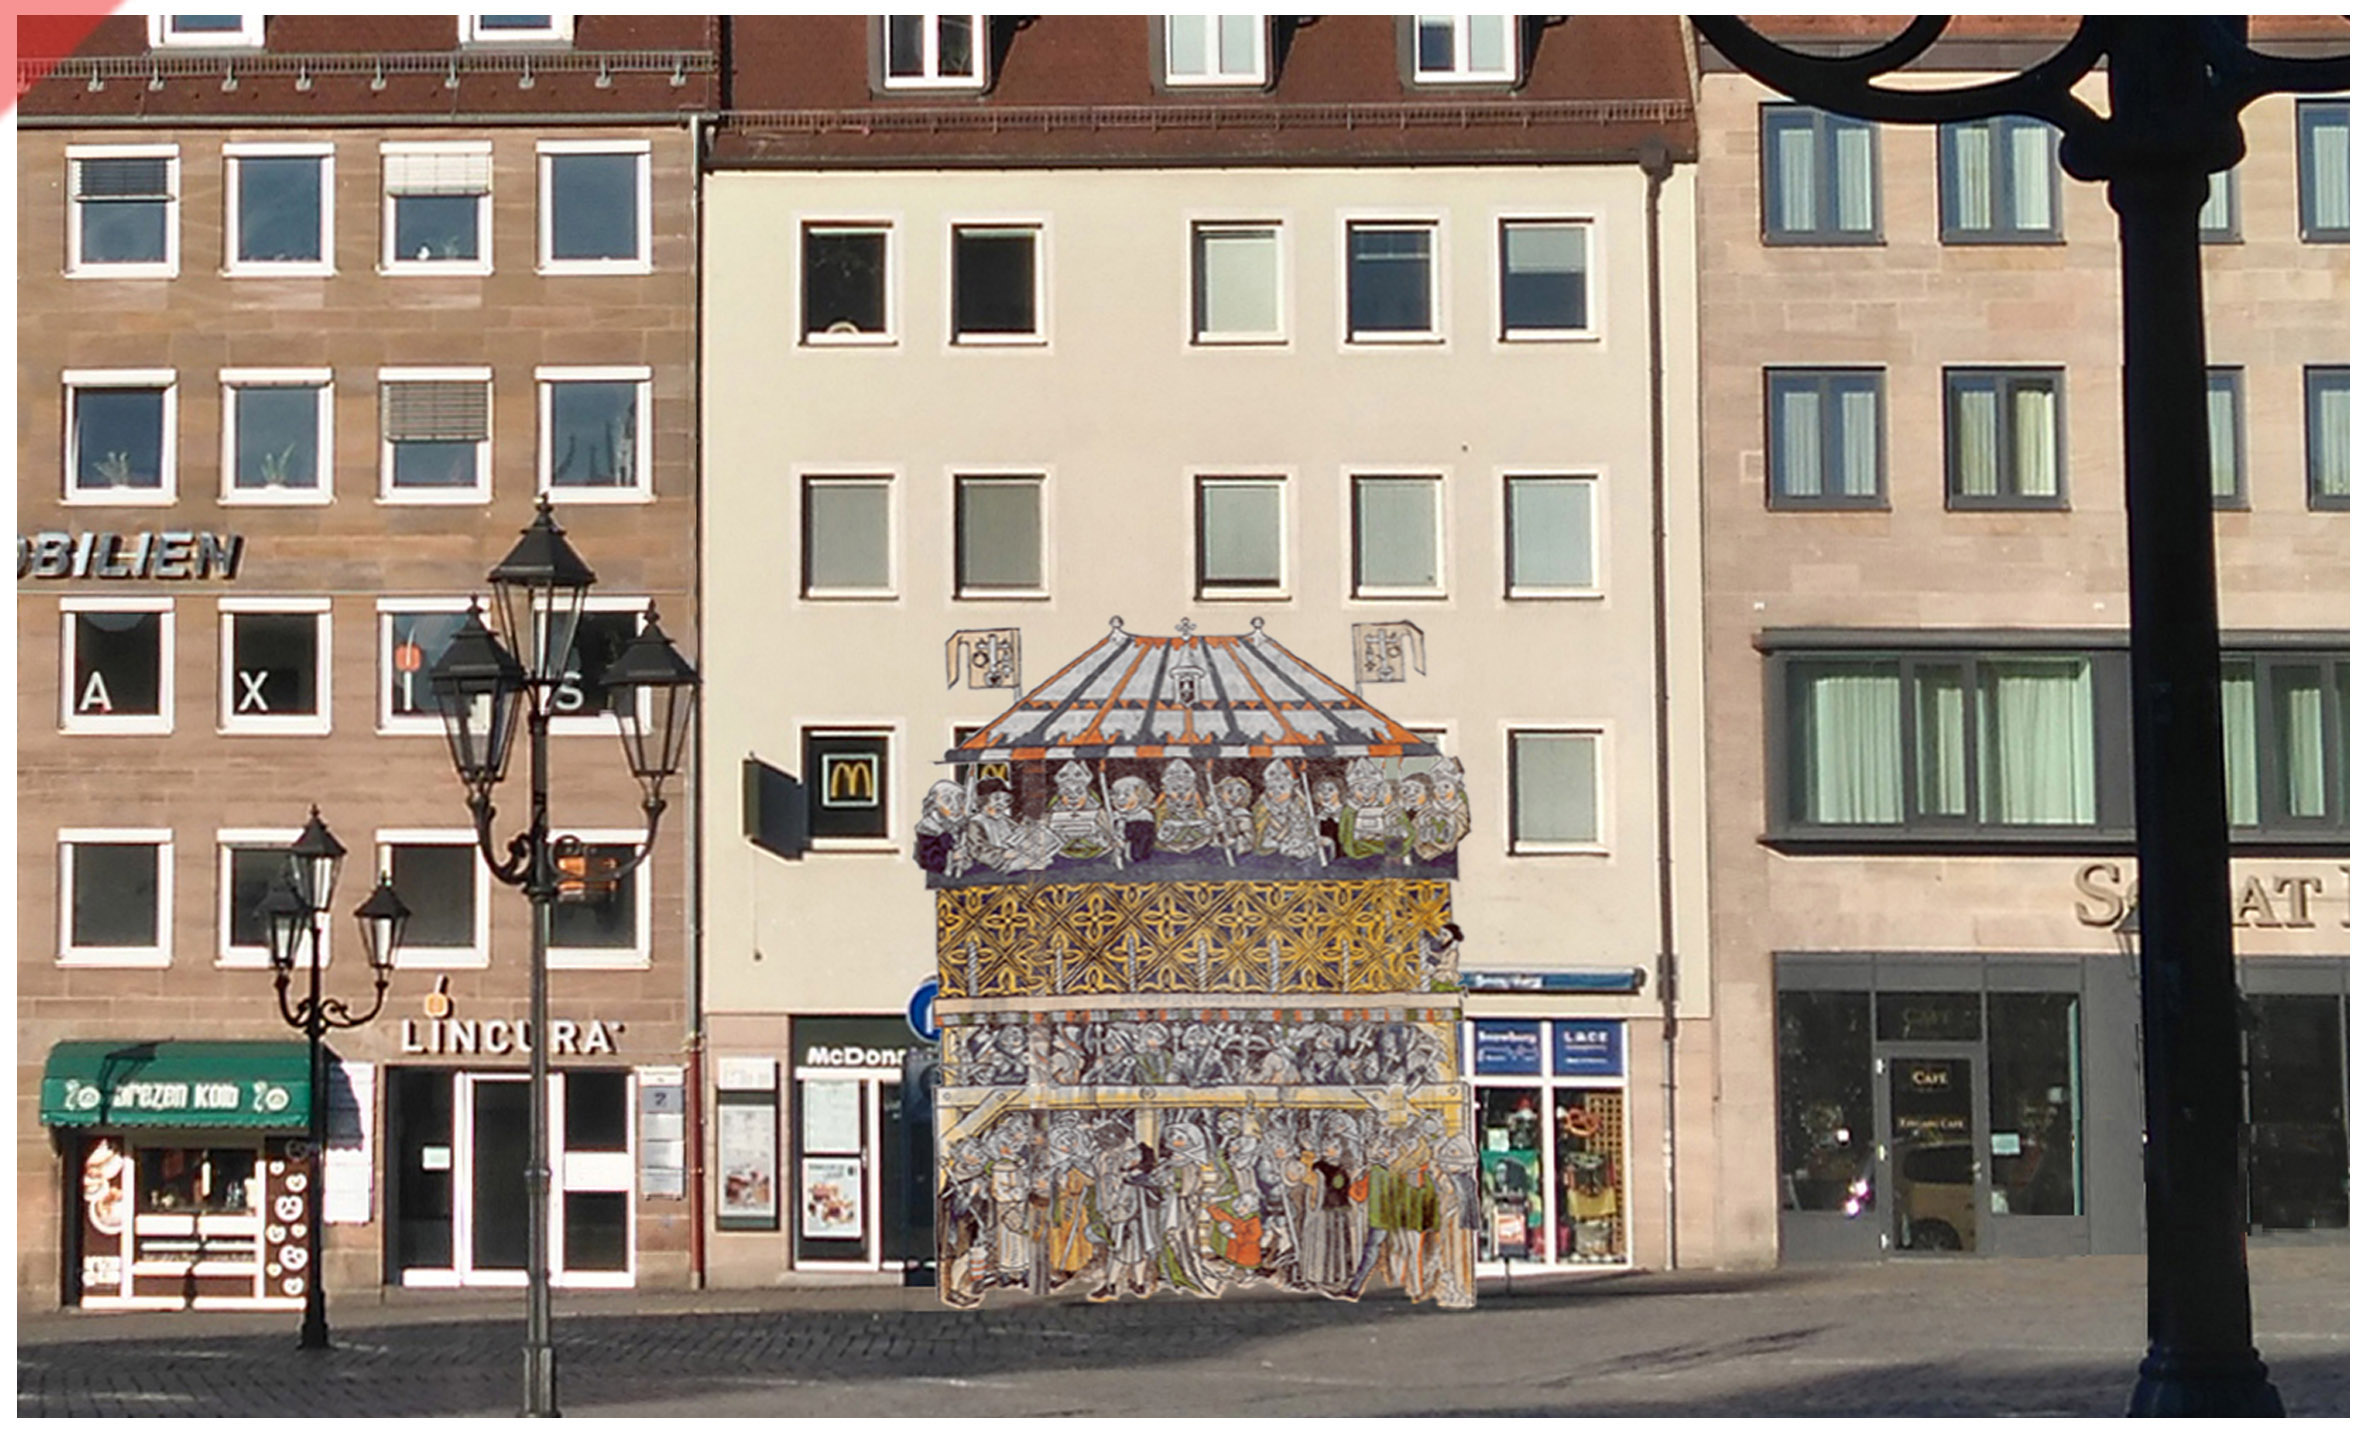 Heiltumsweisung-Nürnberg-Hauptmarkt-15-Schopper-Behaim-1424-1523-Rekonstruktion-Holzschnitt-1487-Gebäude-3-Vergleich